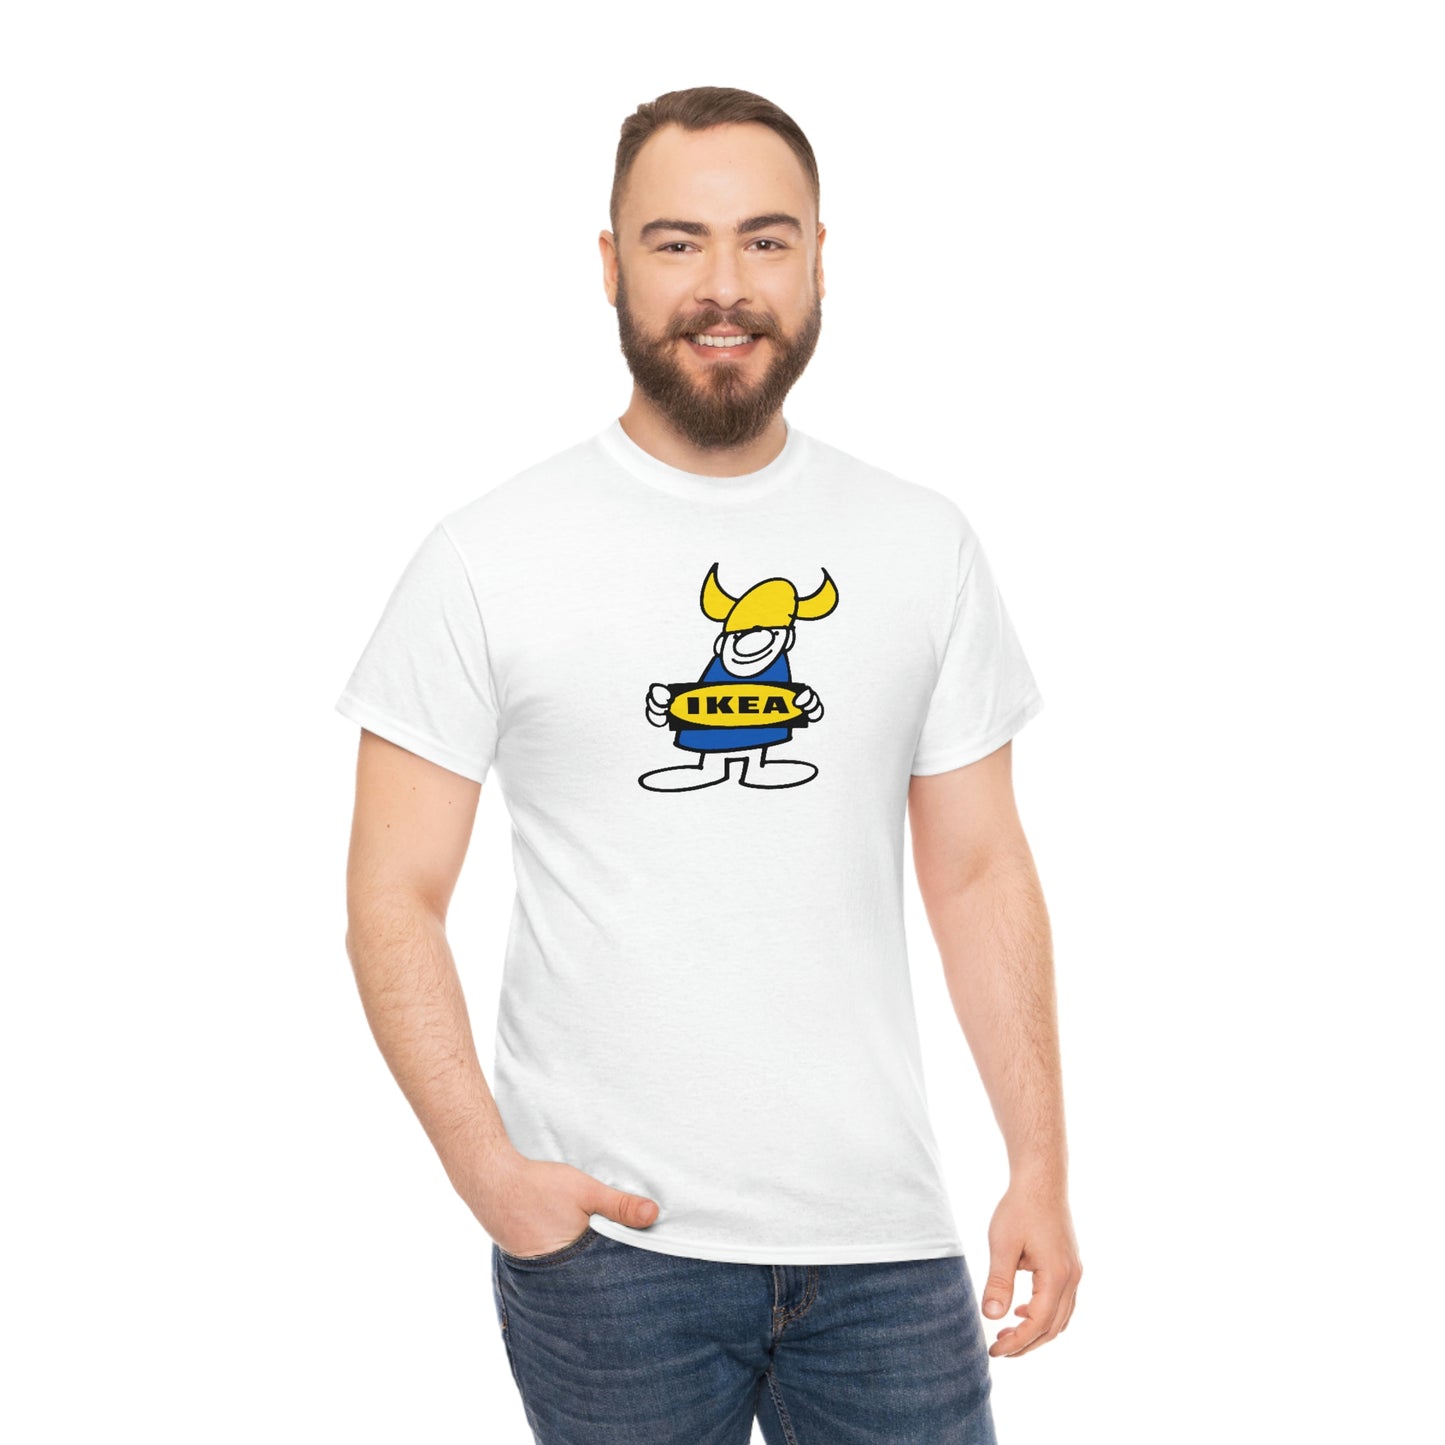 IKEA T-Shirt